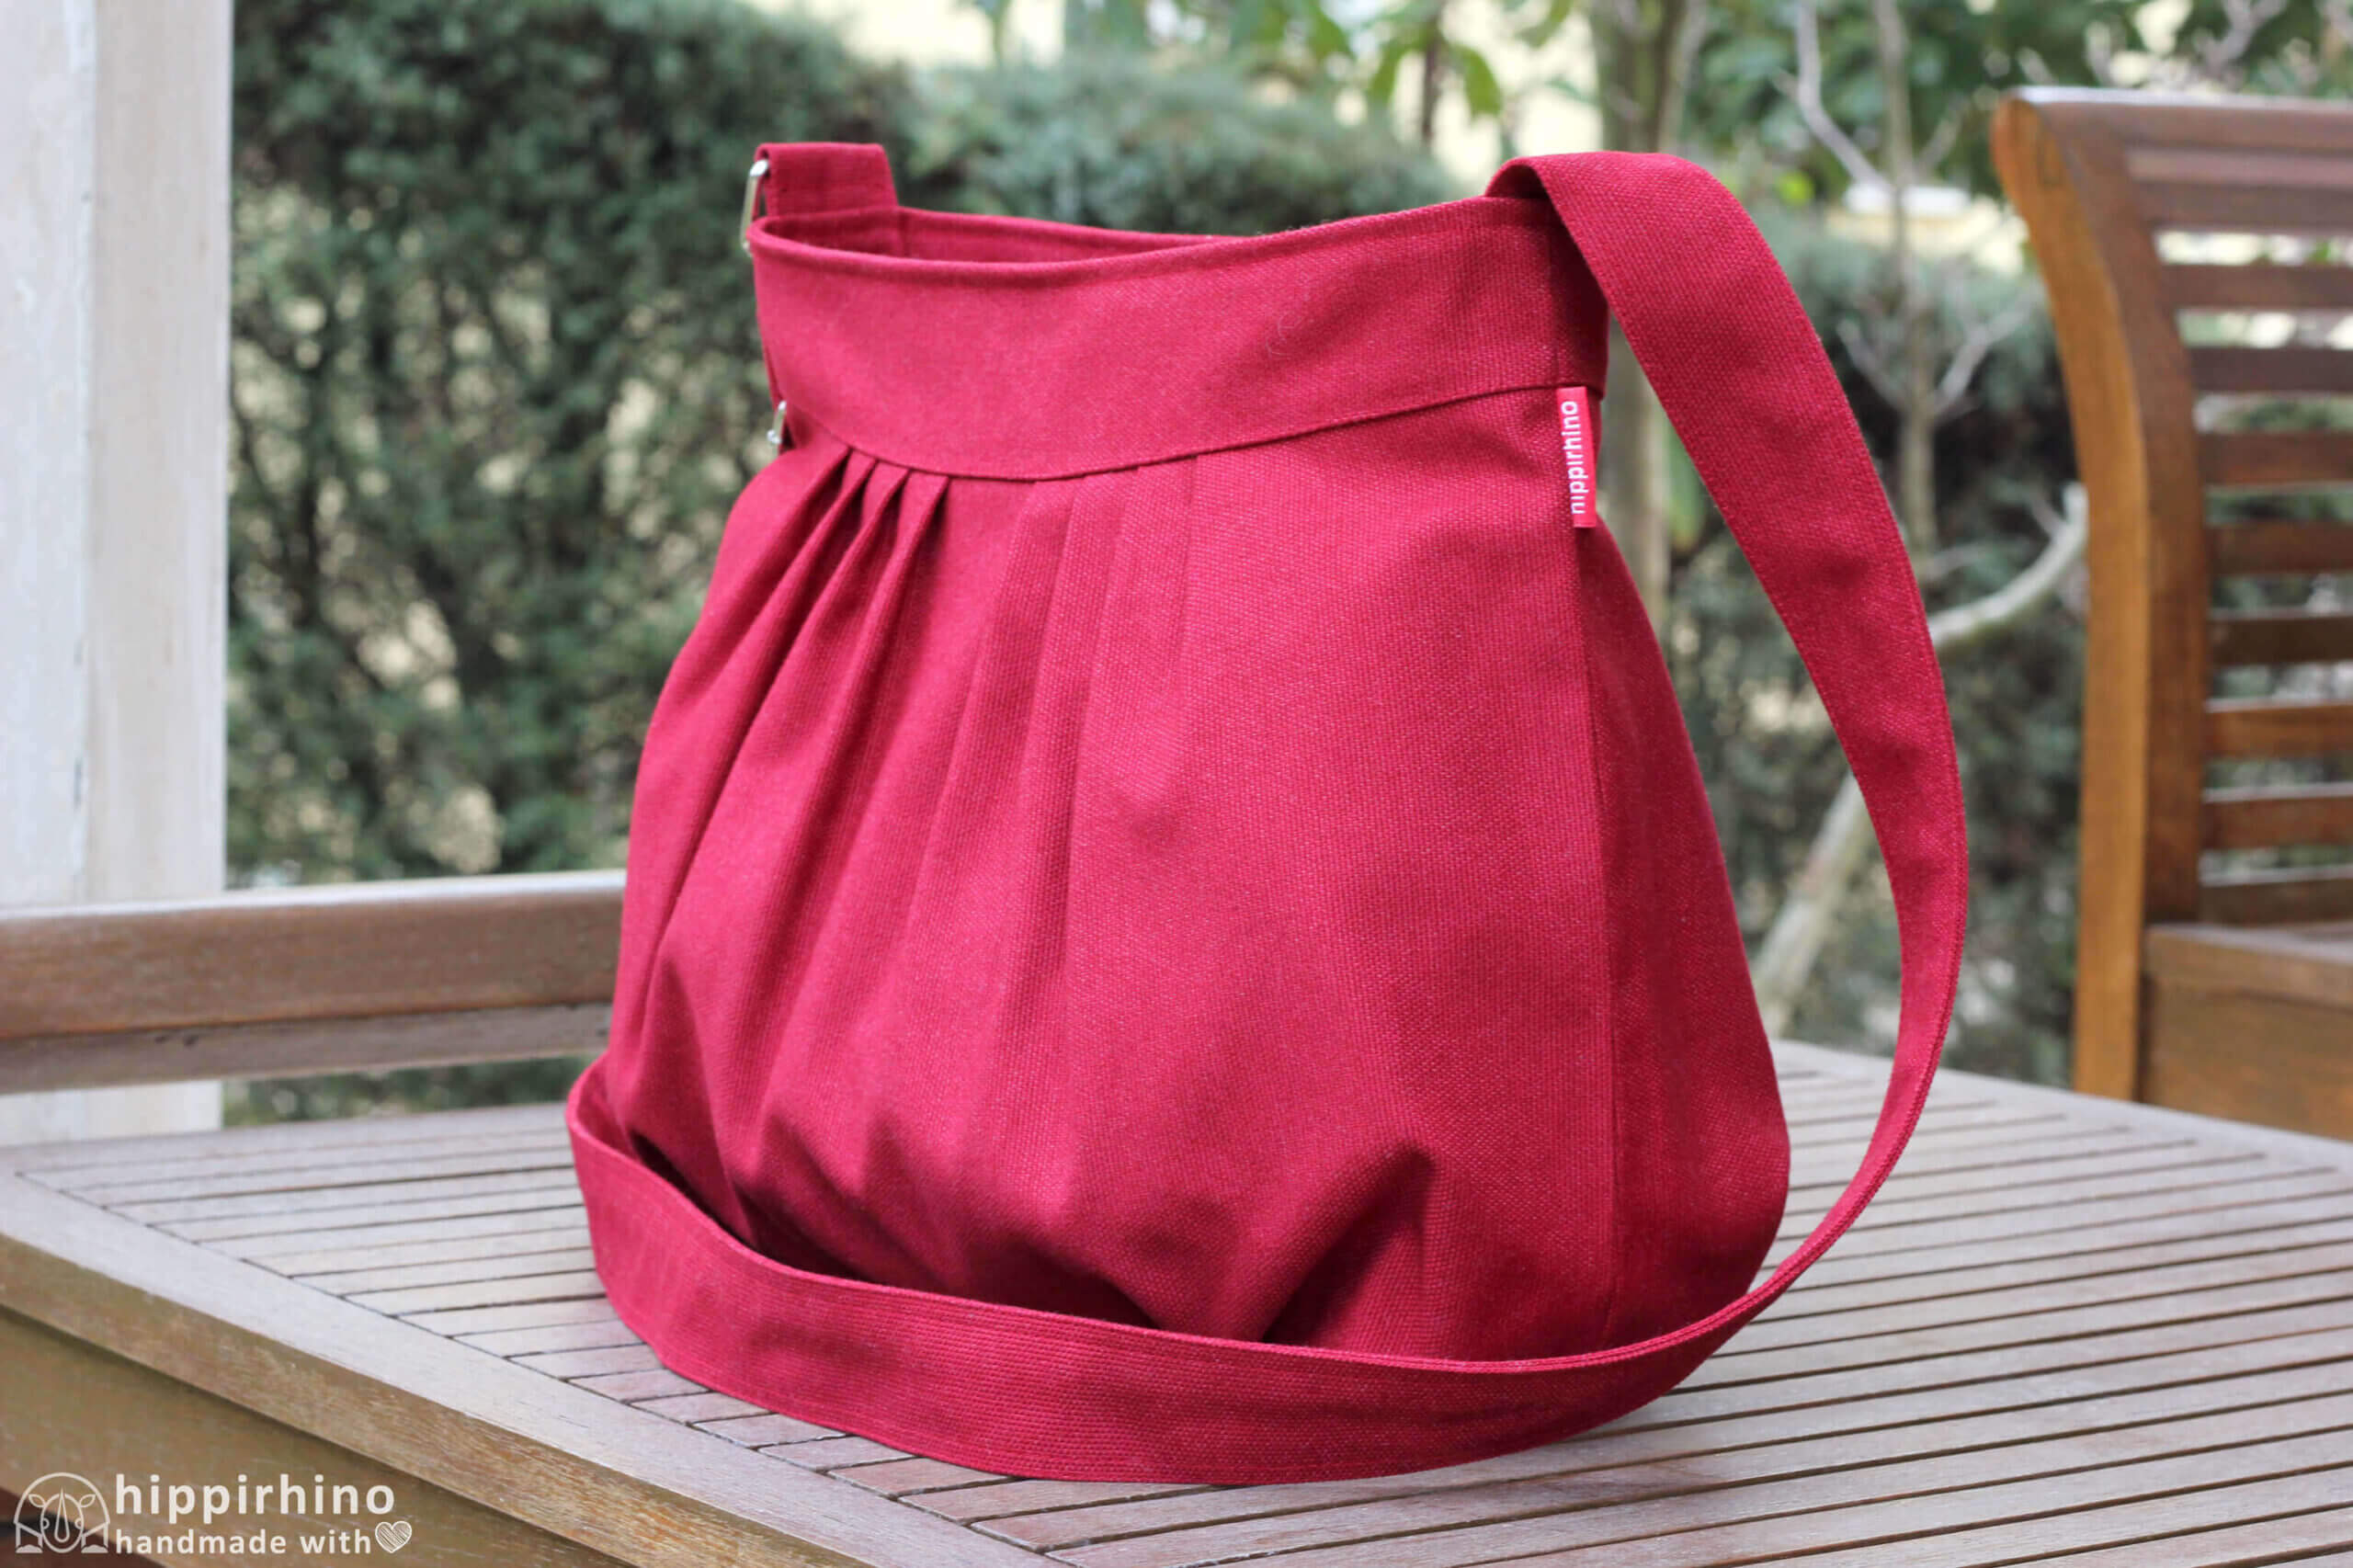 Cloth purse